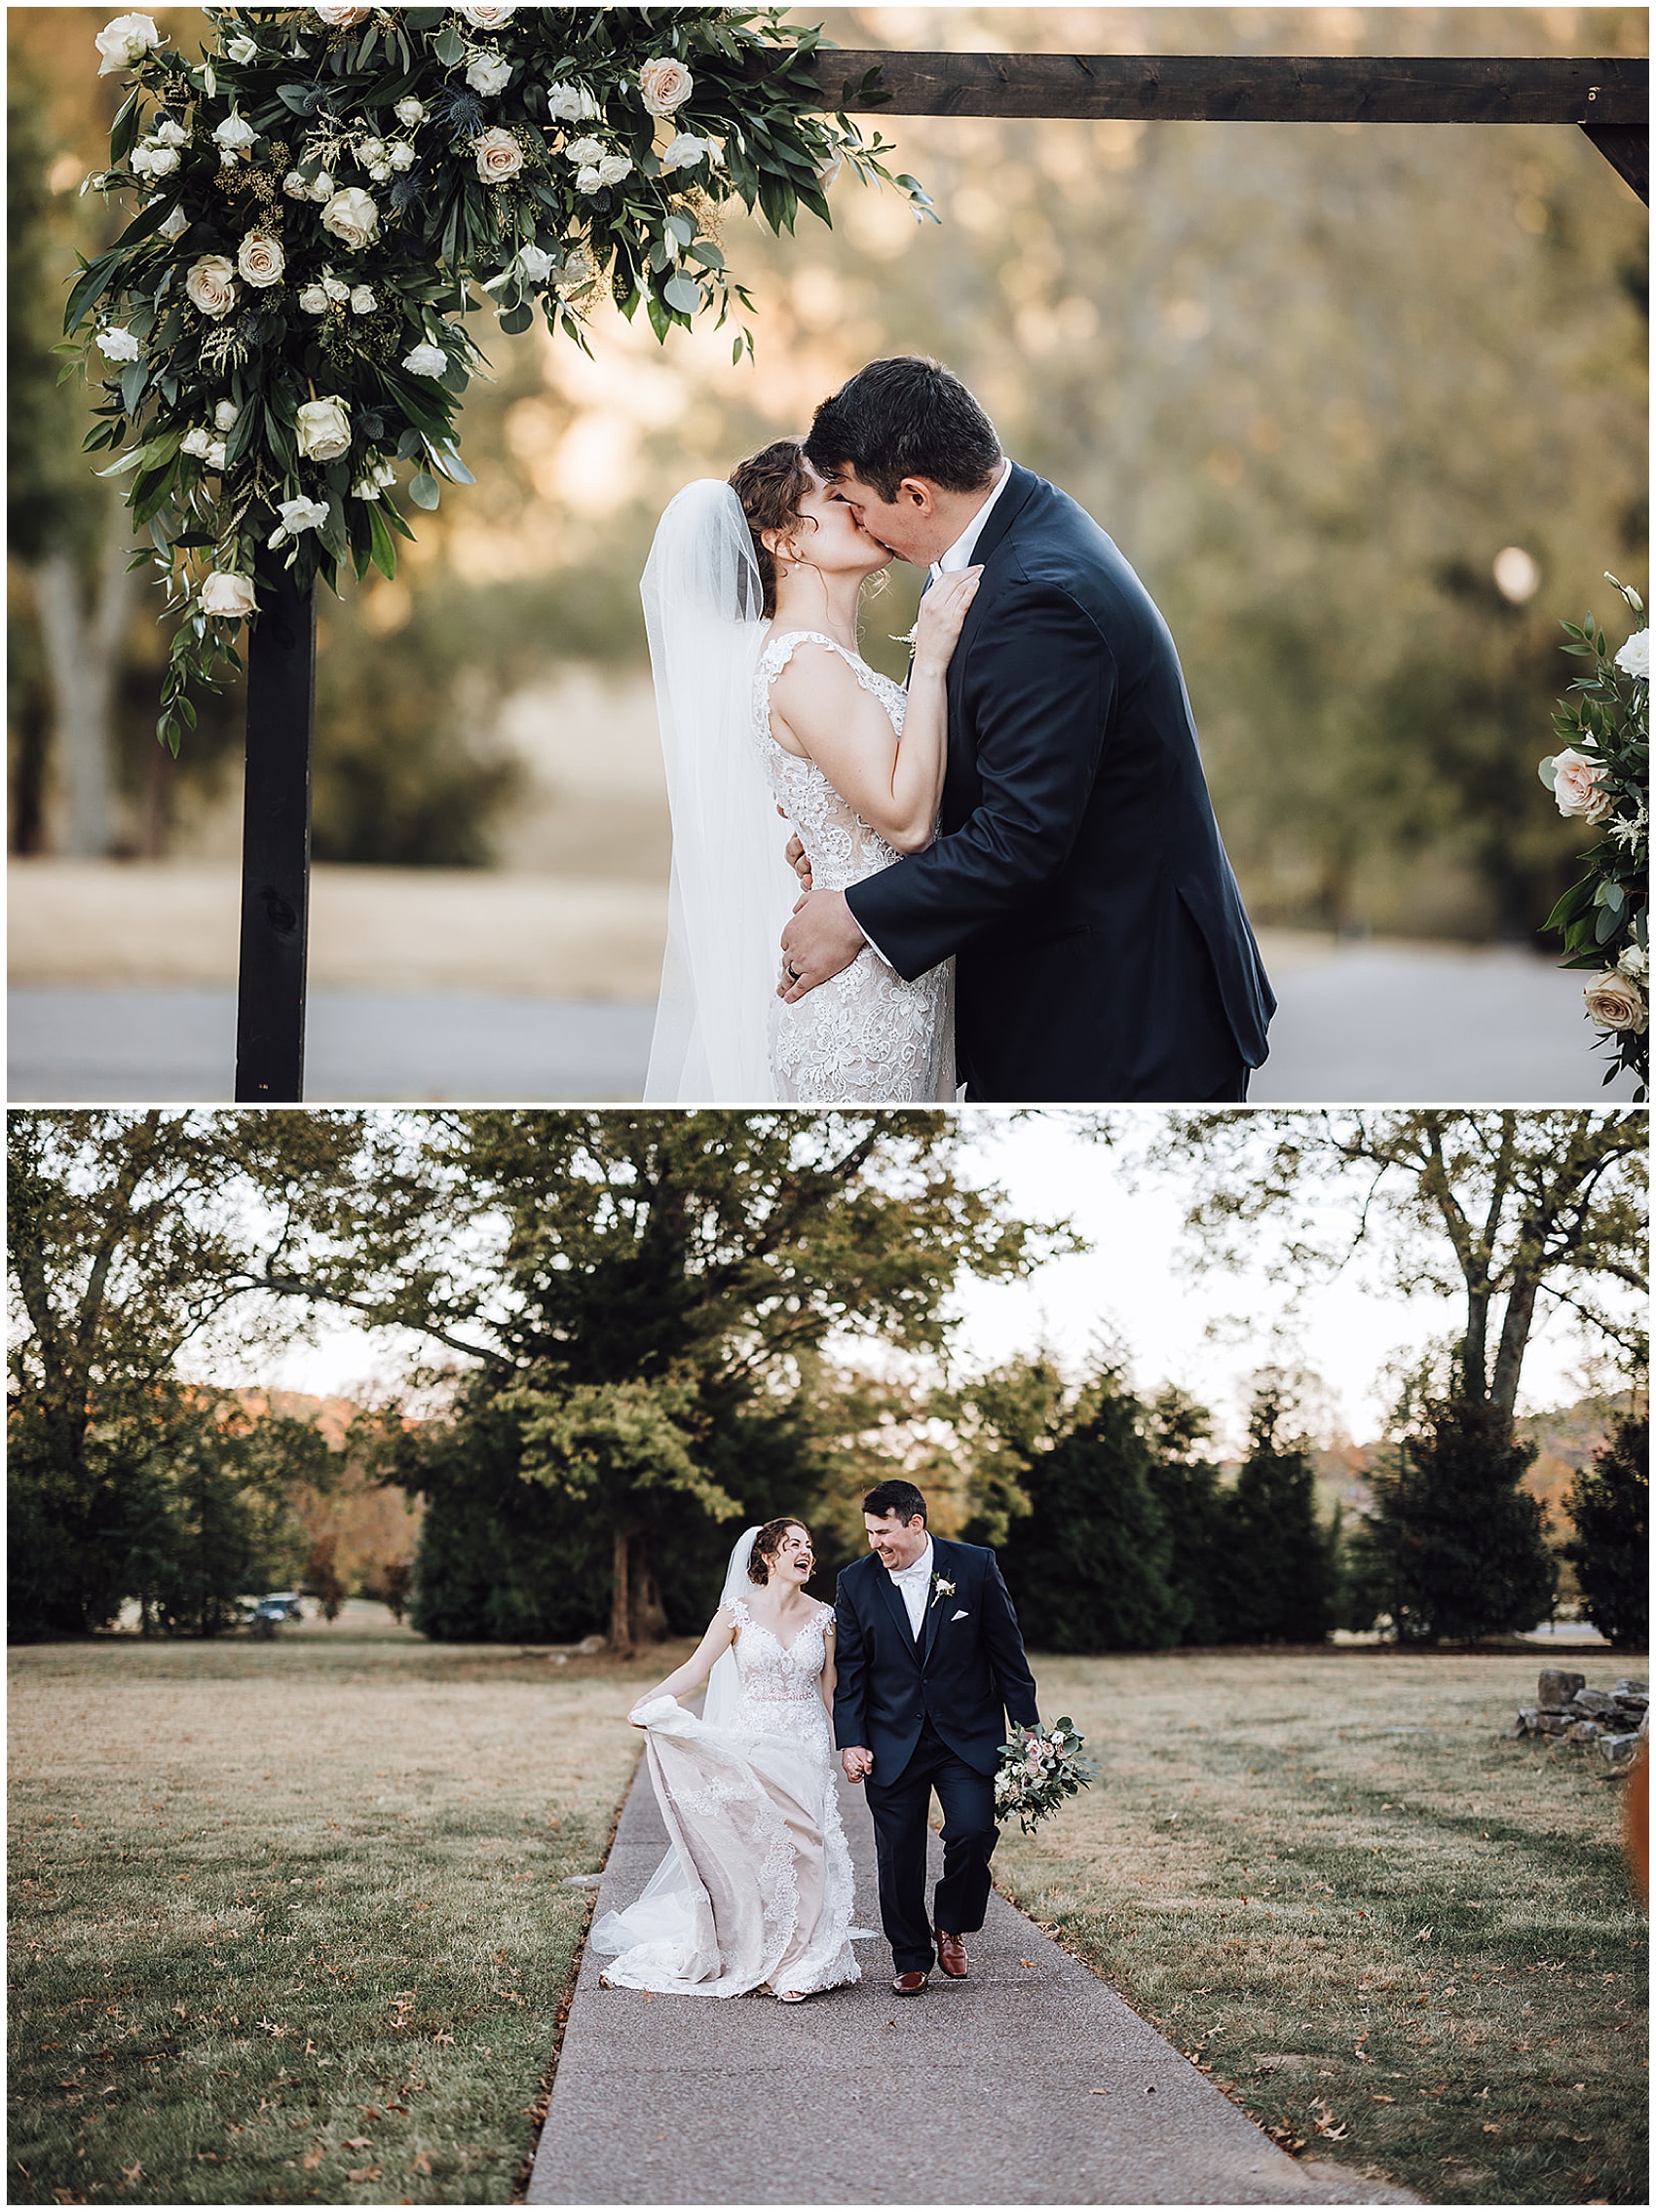 Newlyweds kiss under the ceremony arbor and walk down a sidewalk